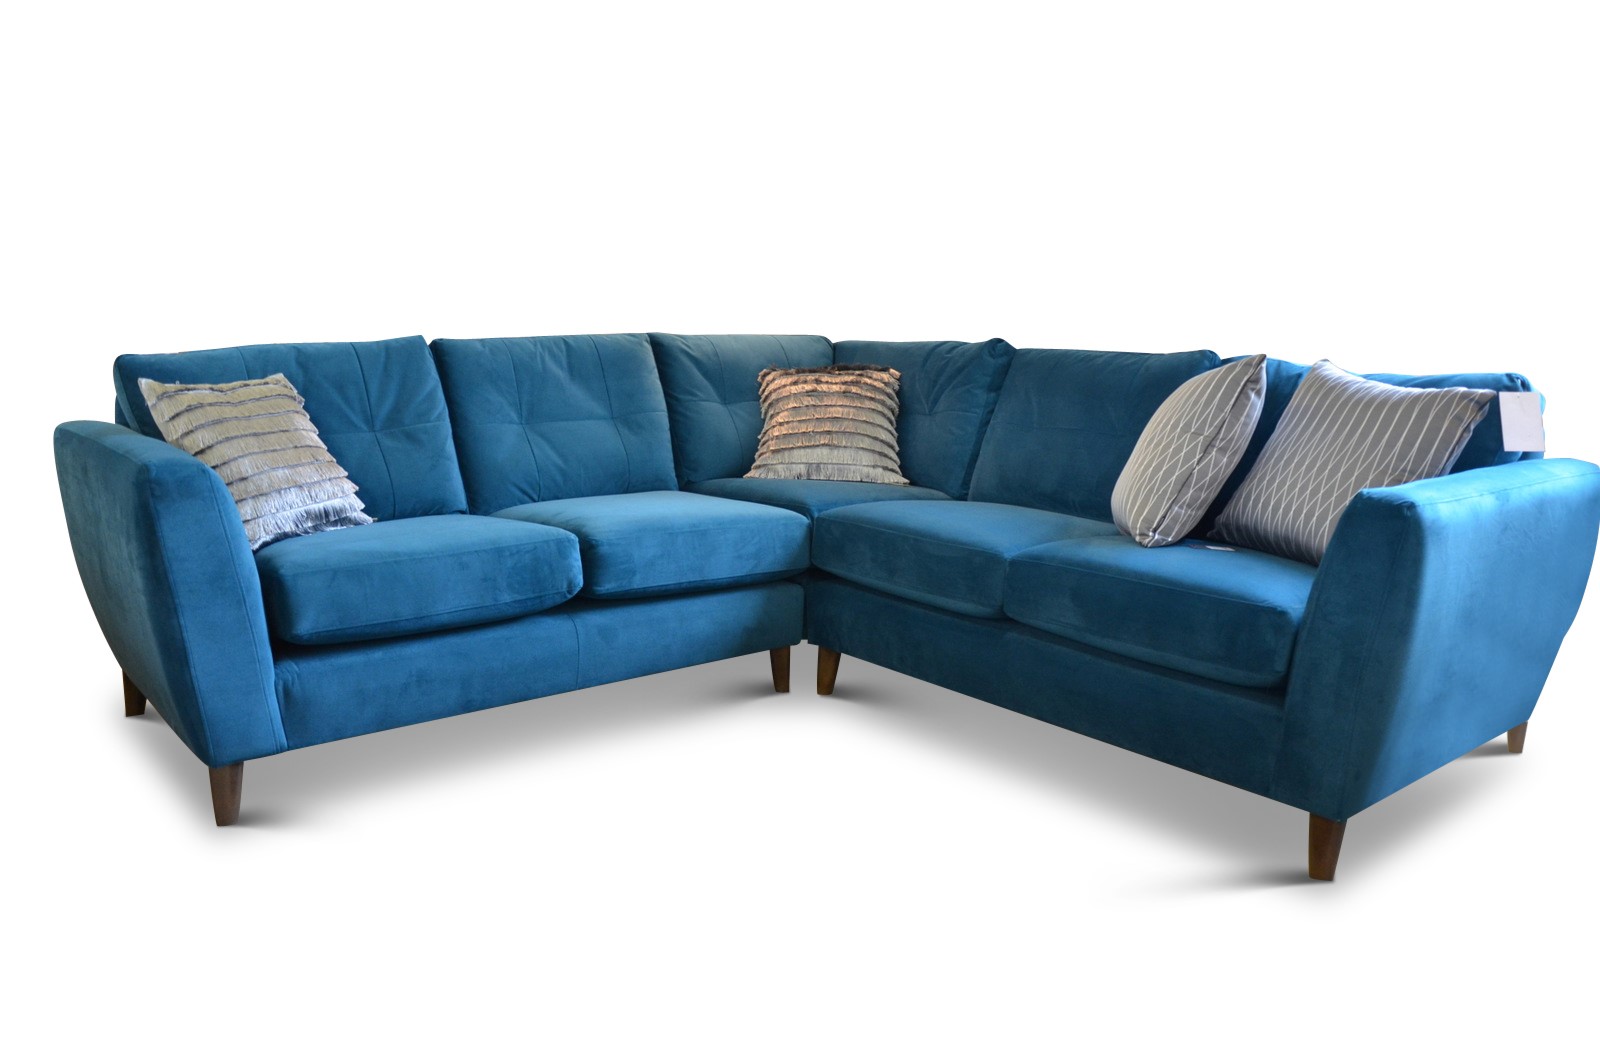 more sofas for sale on eBay